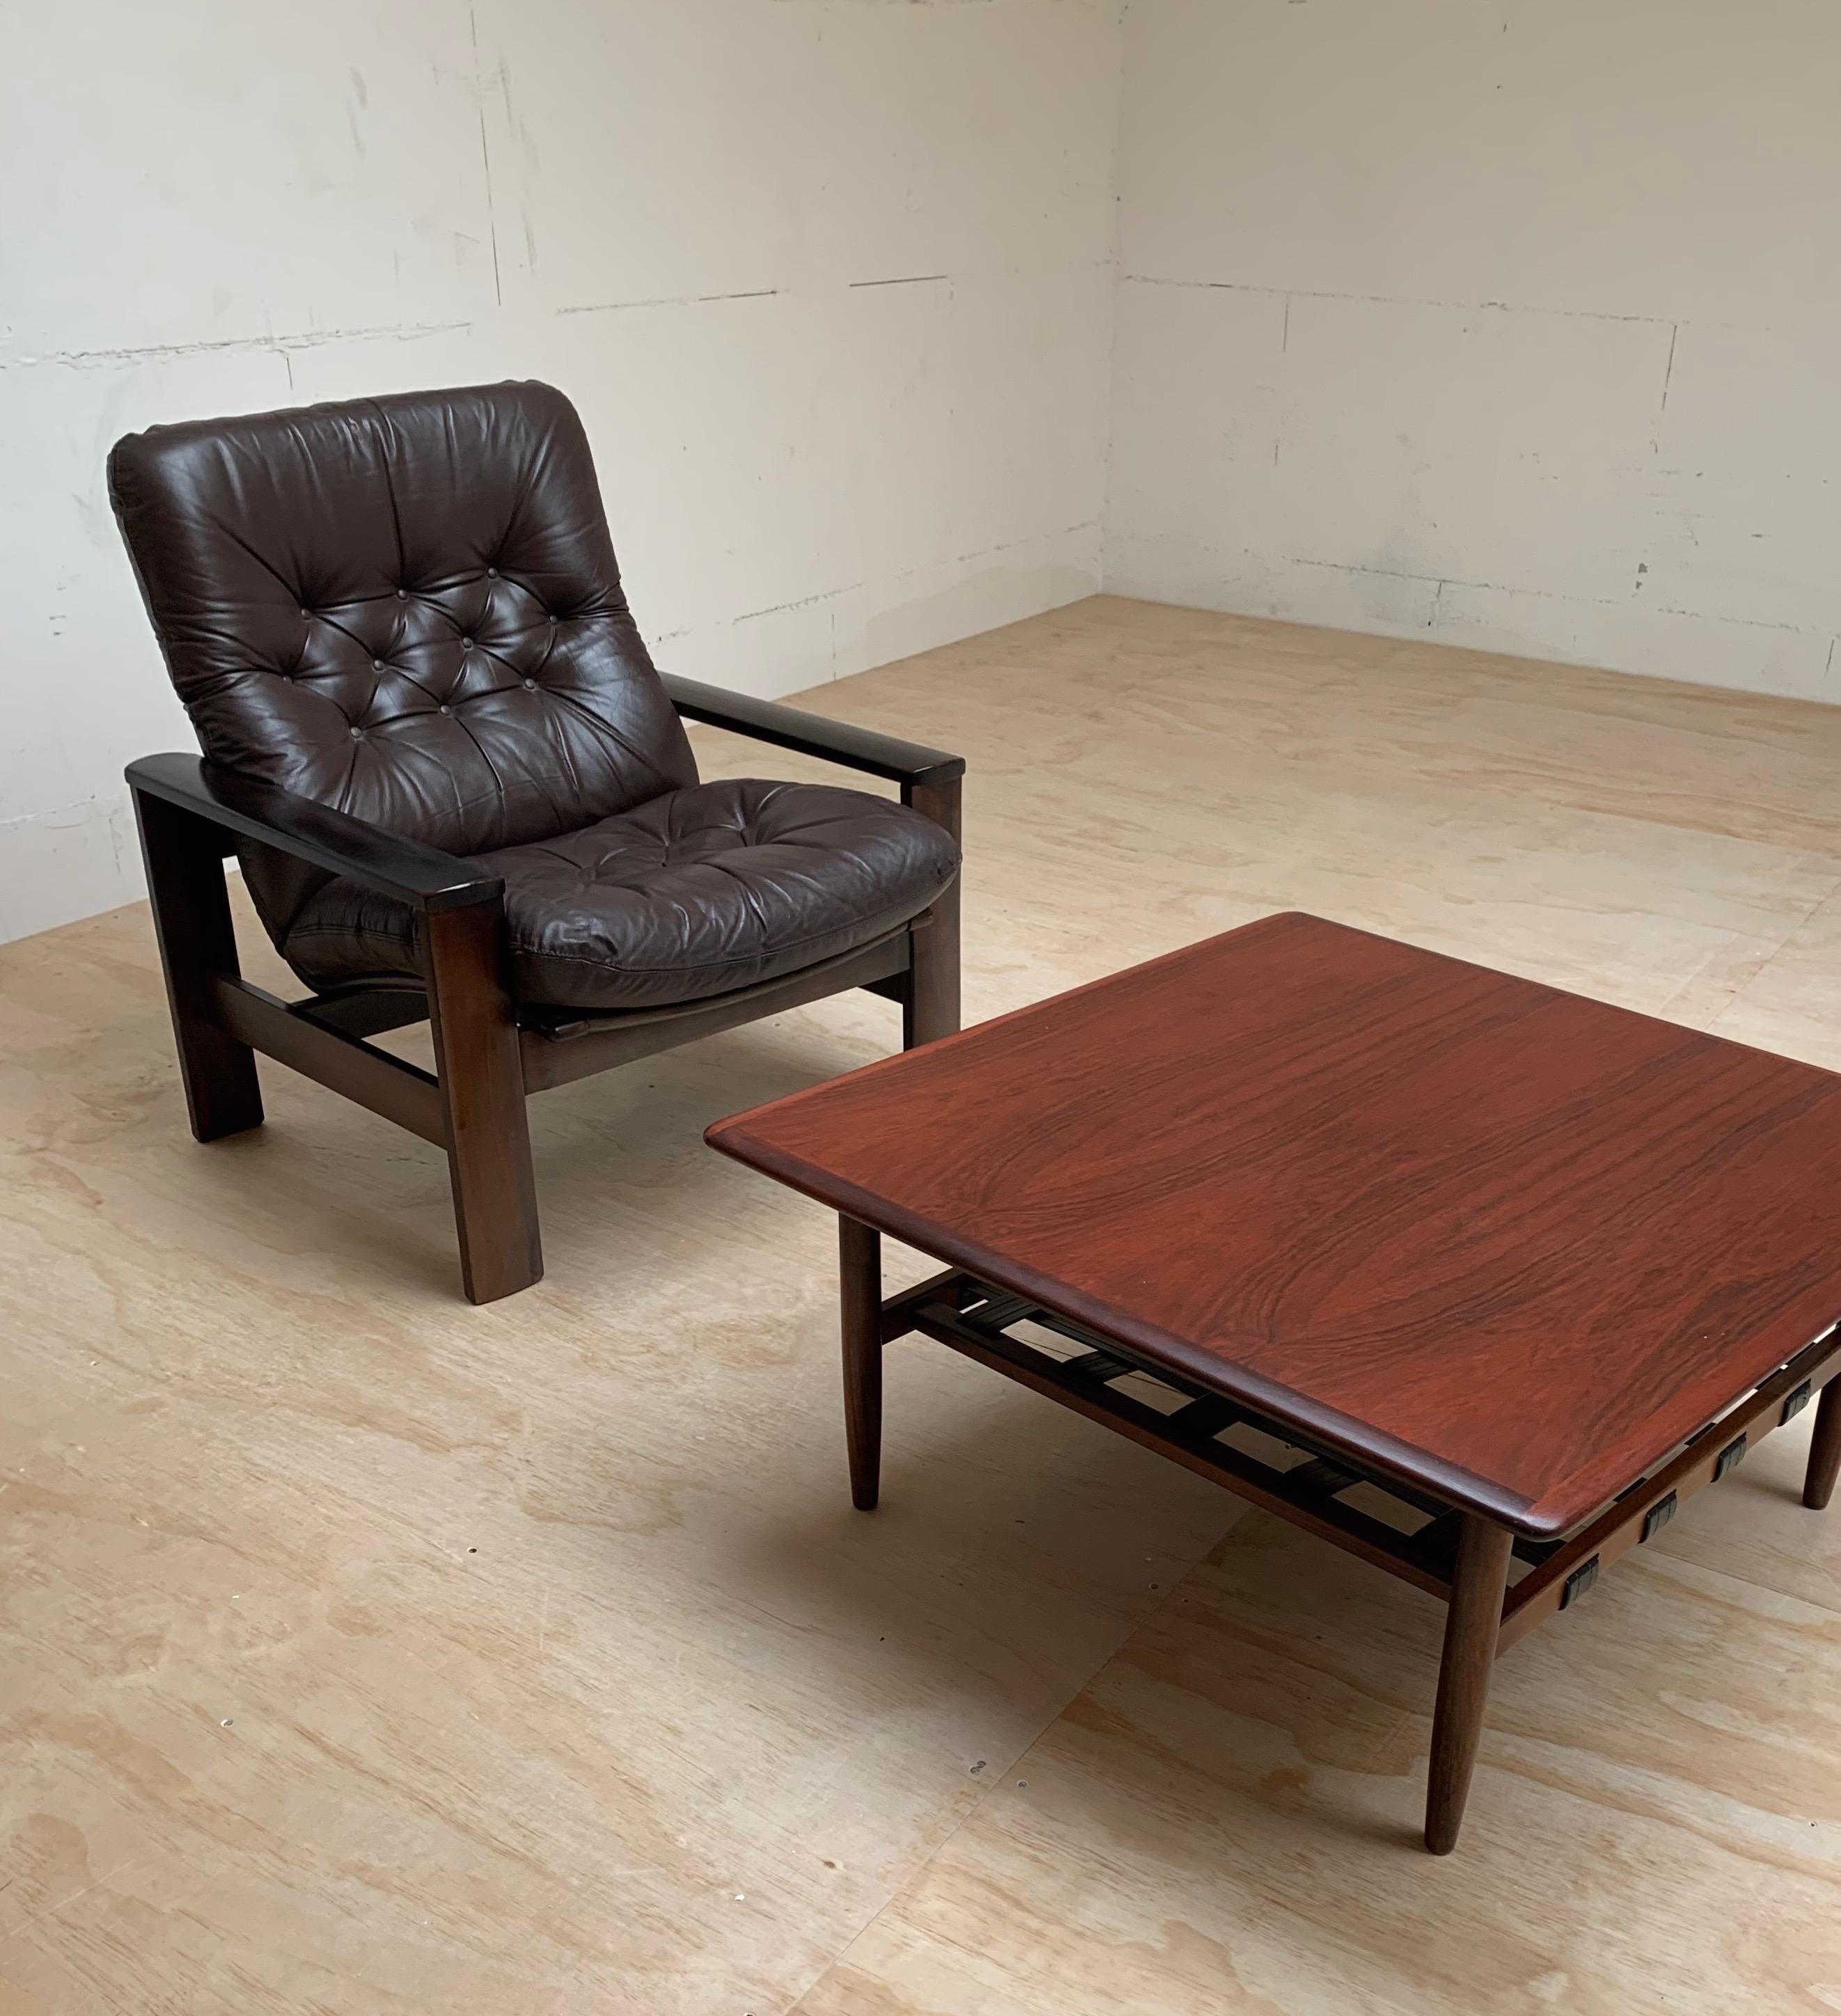 20th Century Mid-Century Danish Solid Teakwood Coffee Table with Black Leather Magazine Rack